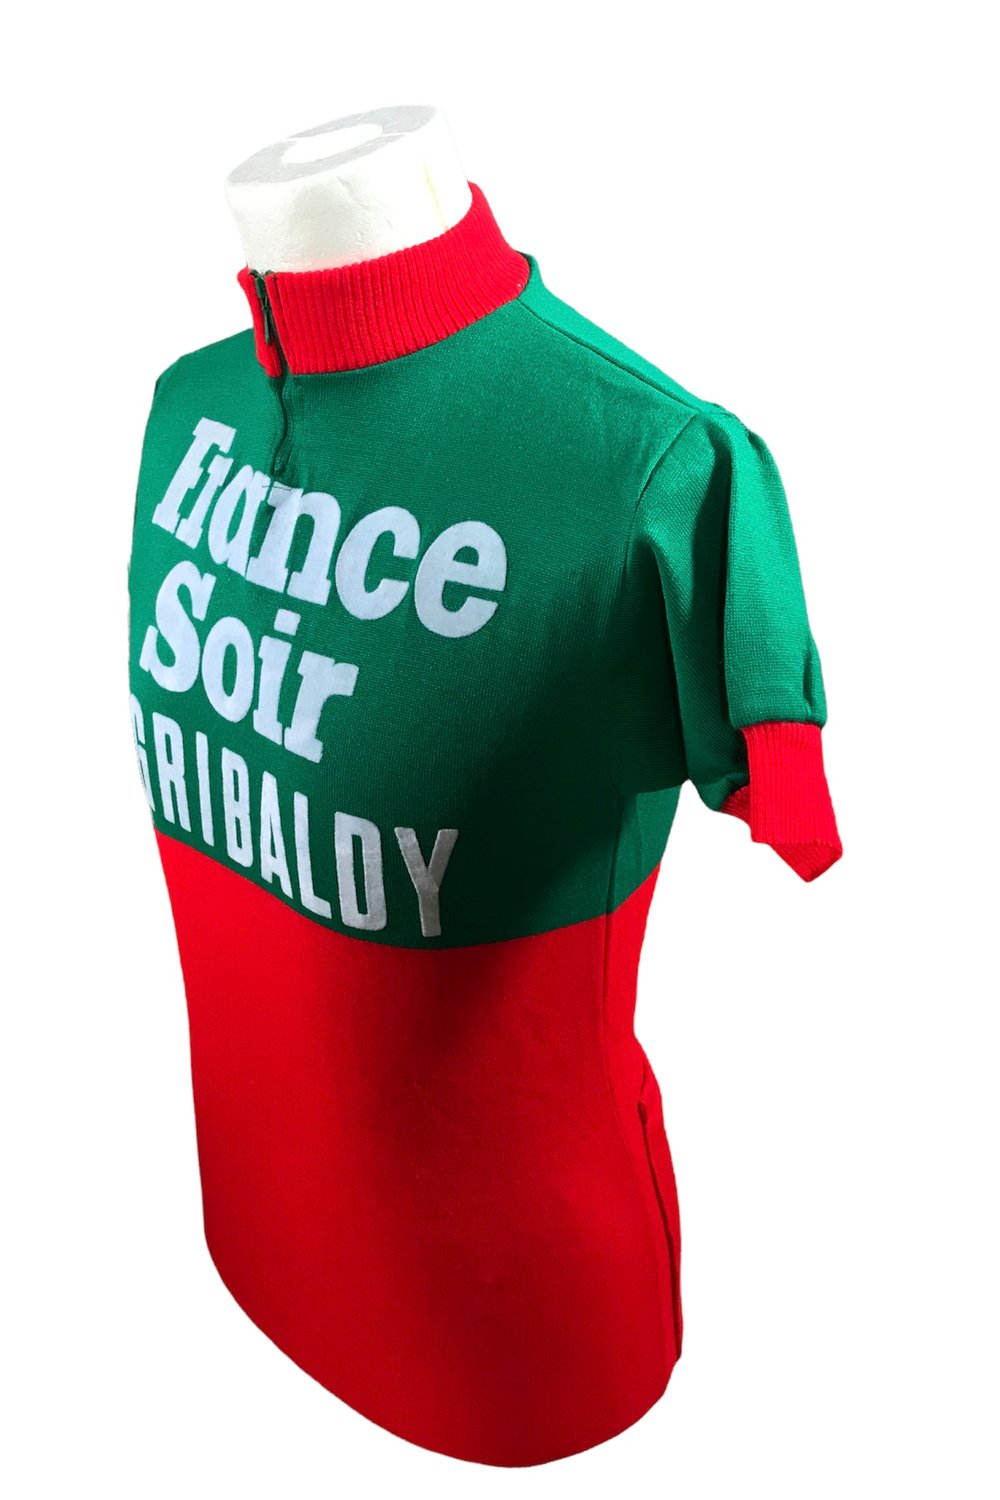 France-Soir de Gribaldy ðŸ‡«ðŸ‡· 1970s used amateur jersey 